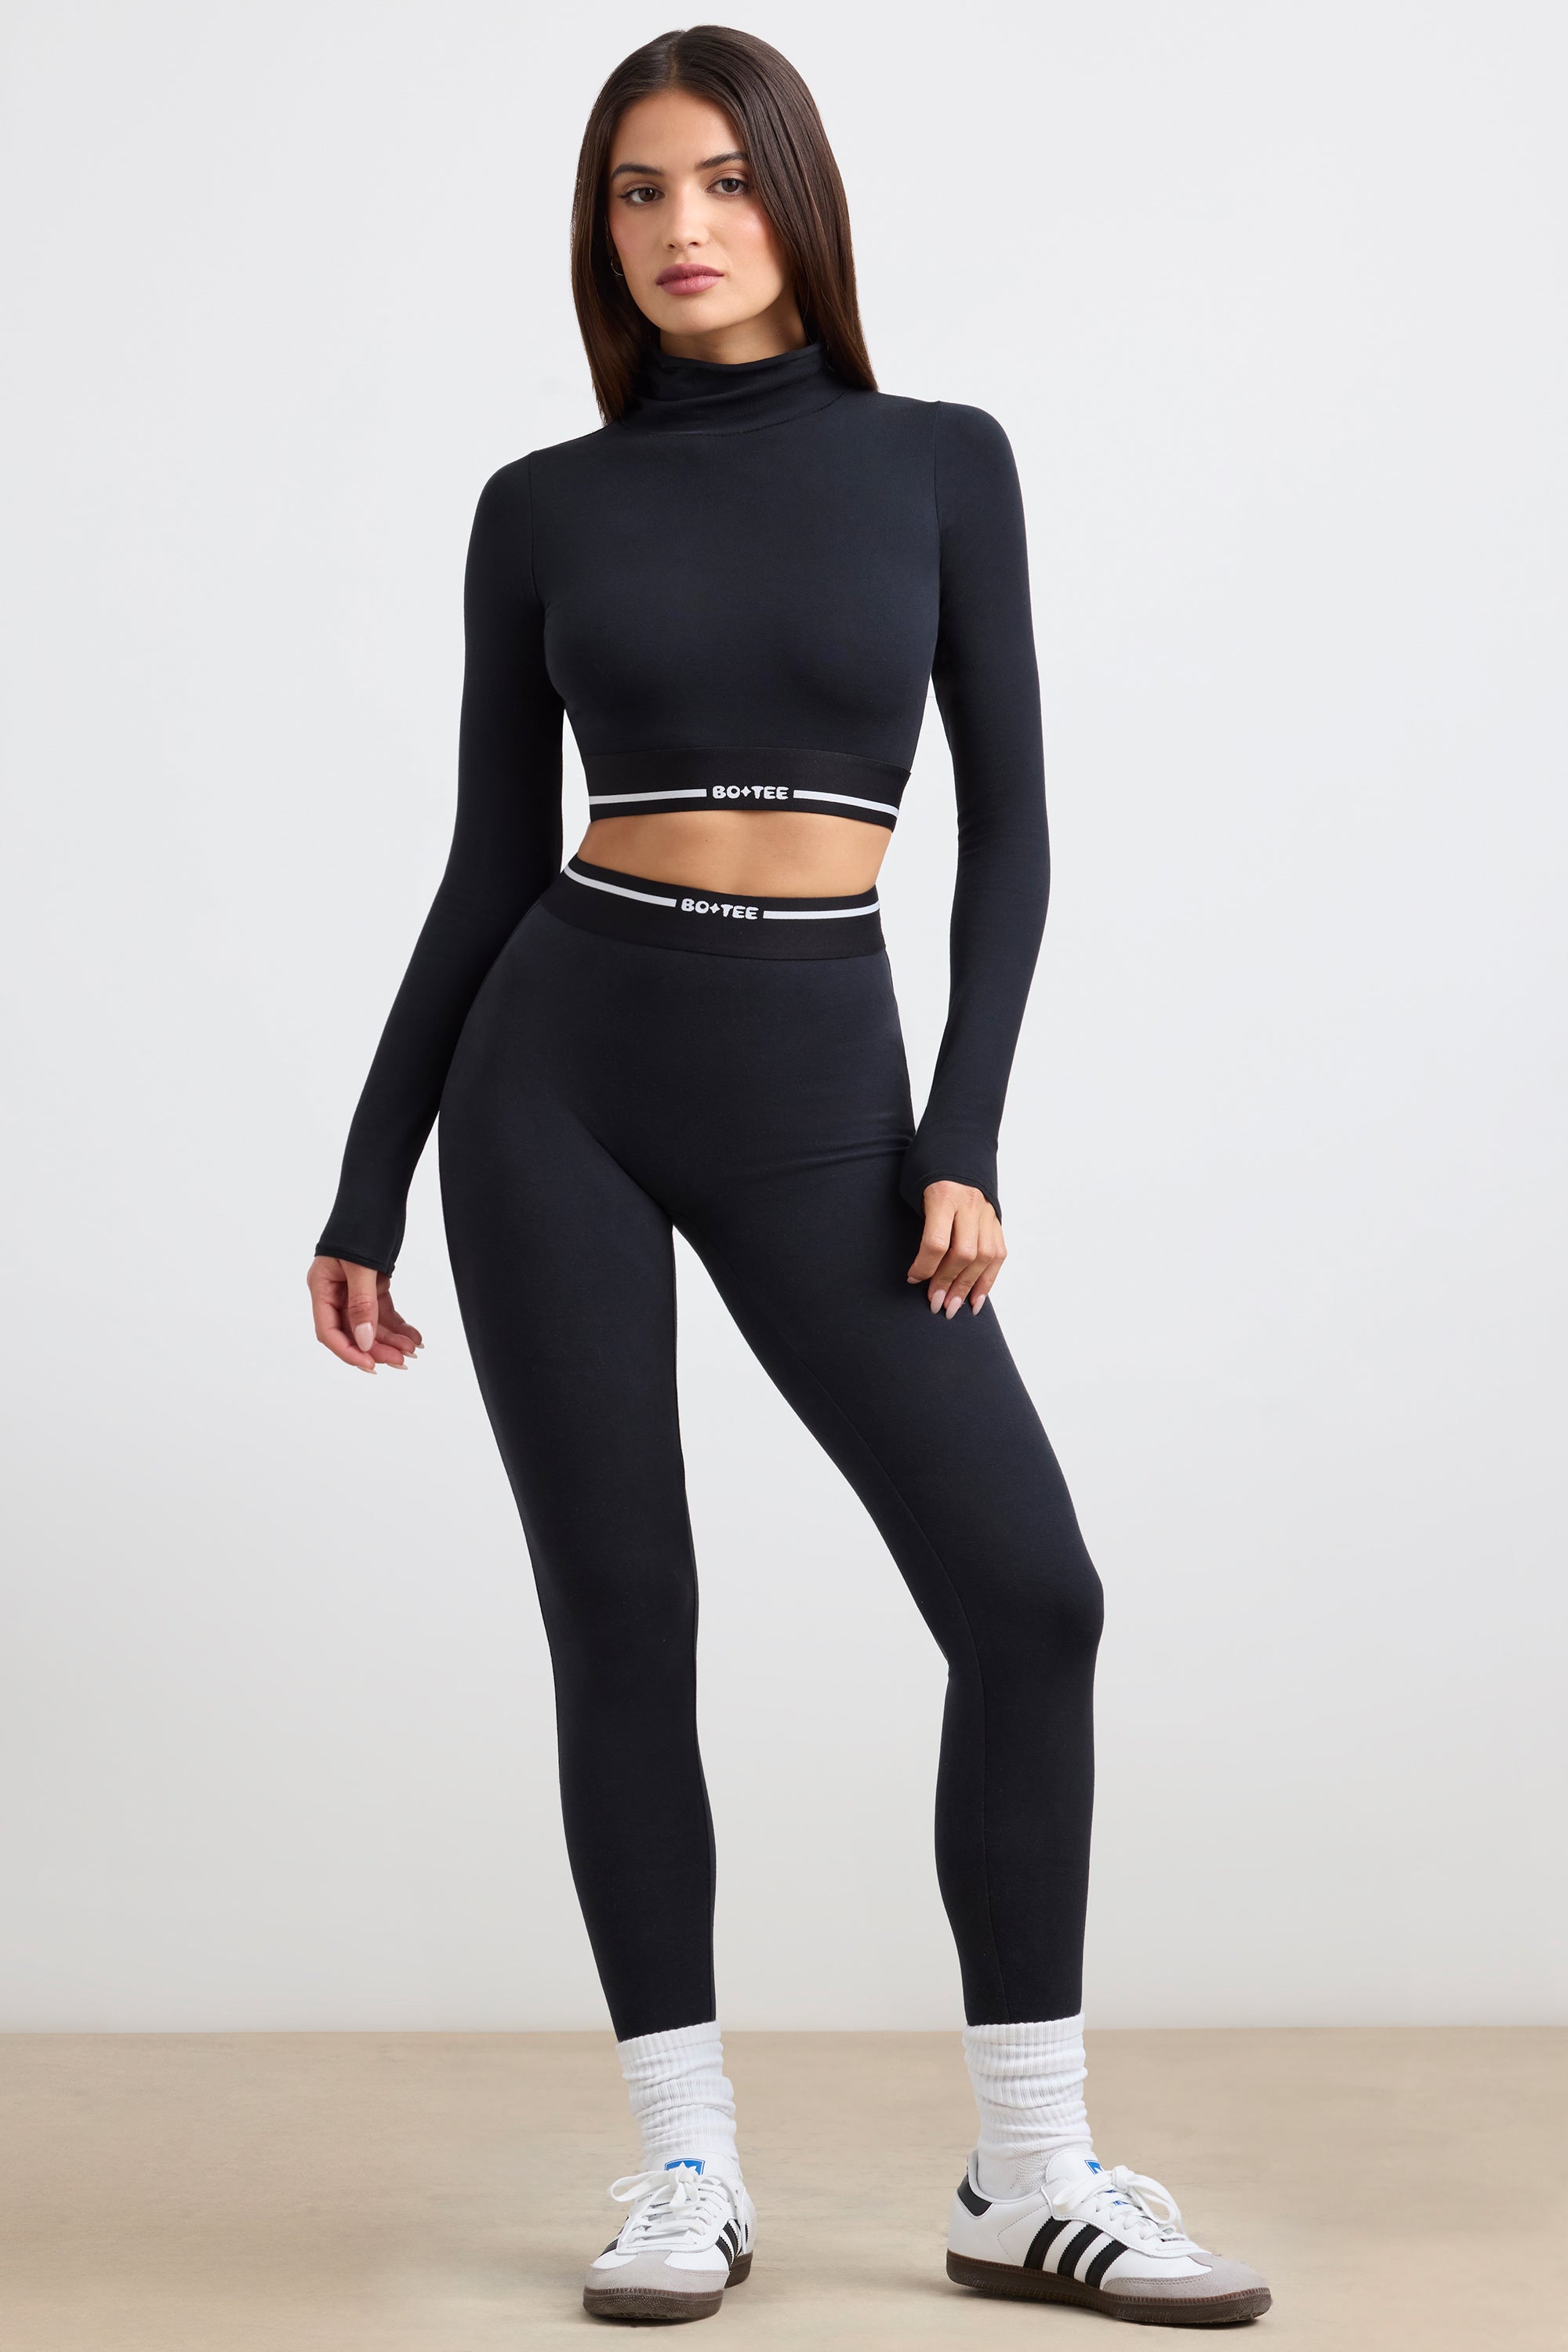 Versace gym leggings | Black gym leggings, Clothes design, Leggings shop